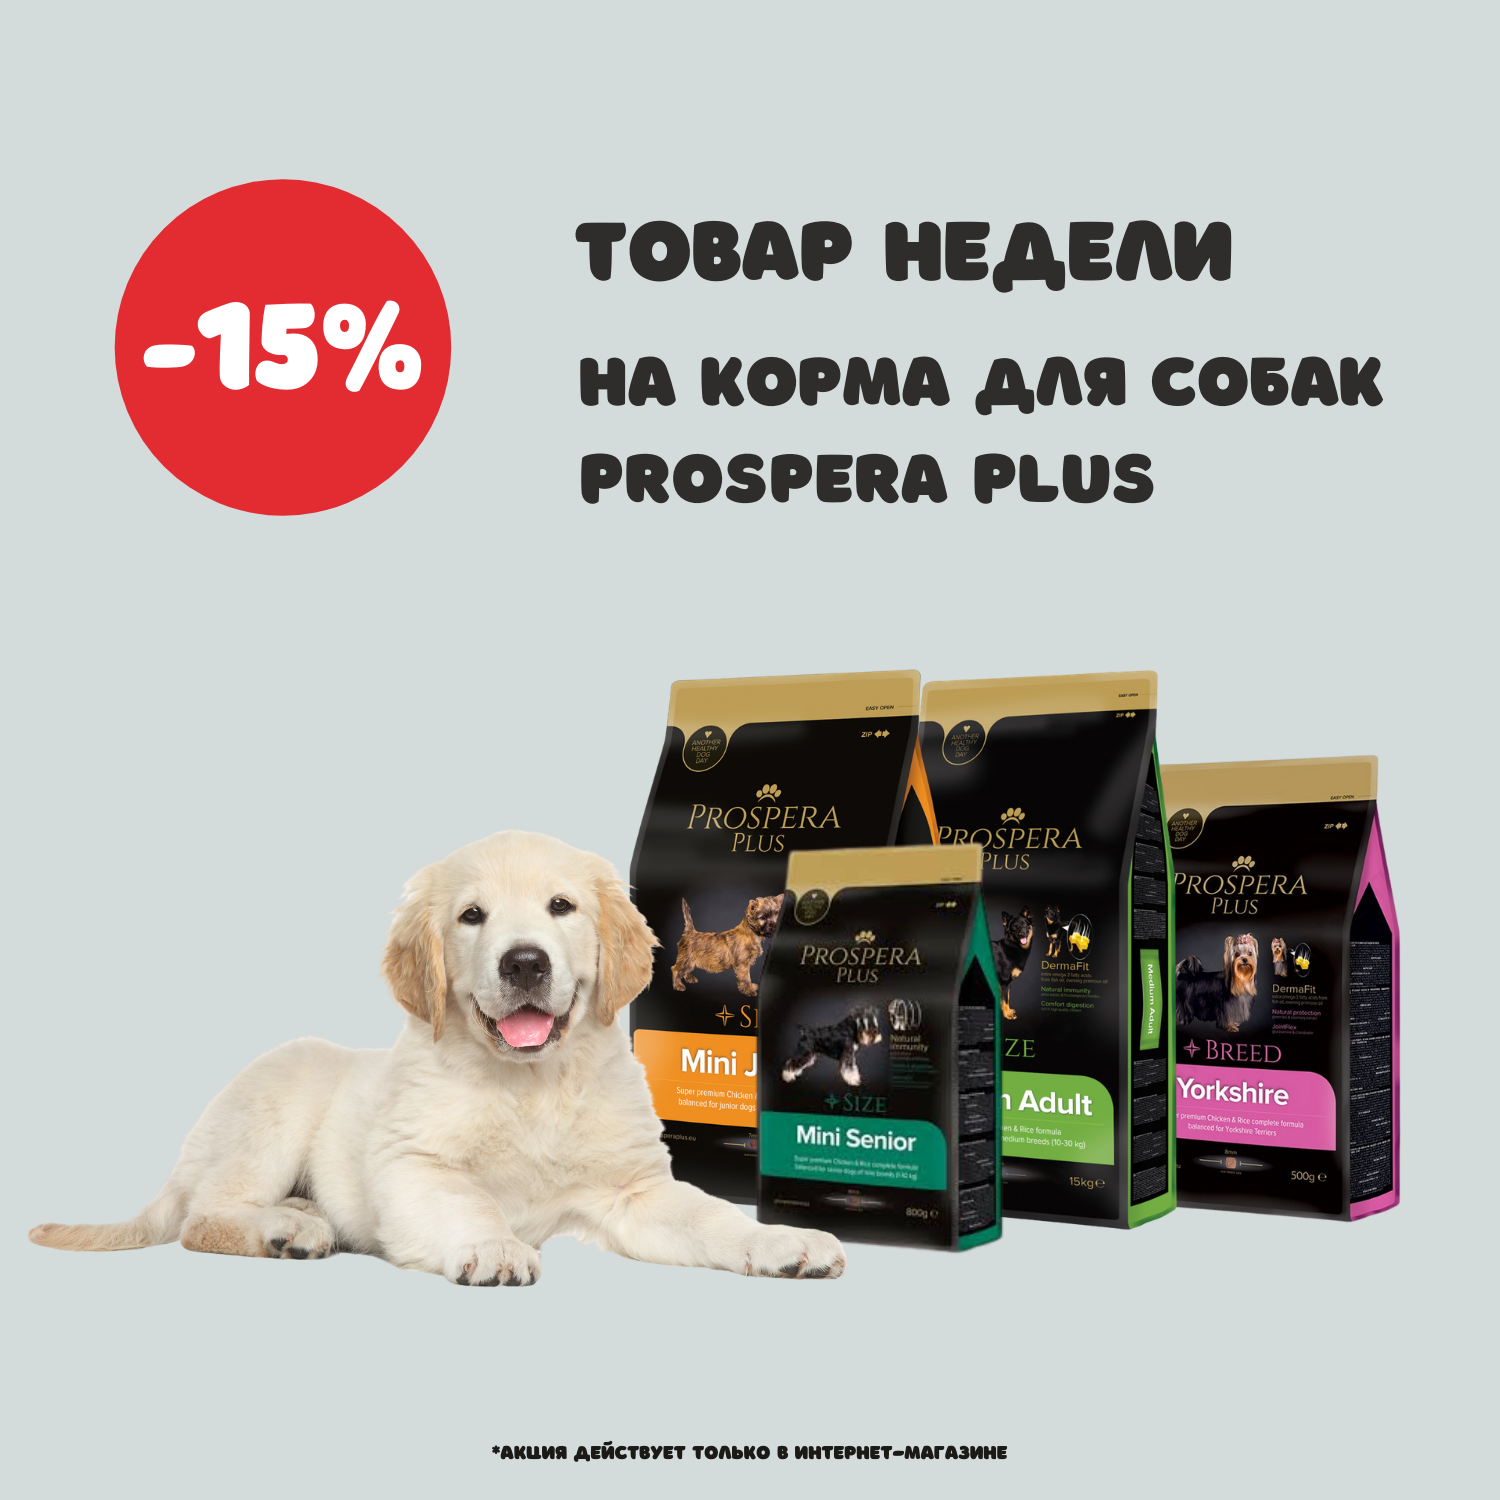 Товар недели – корма для собак Prospera Plus до 13 декабря